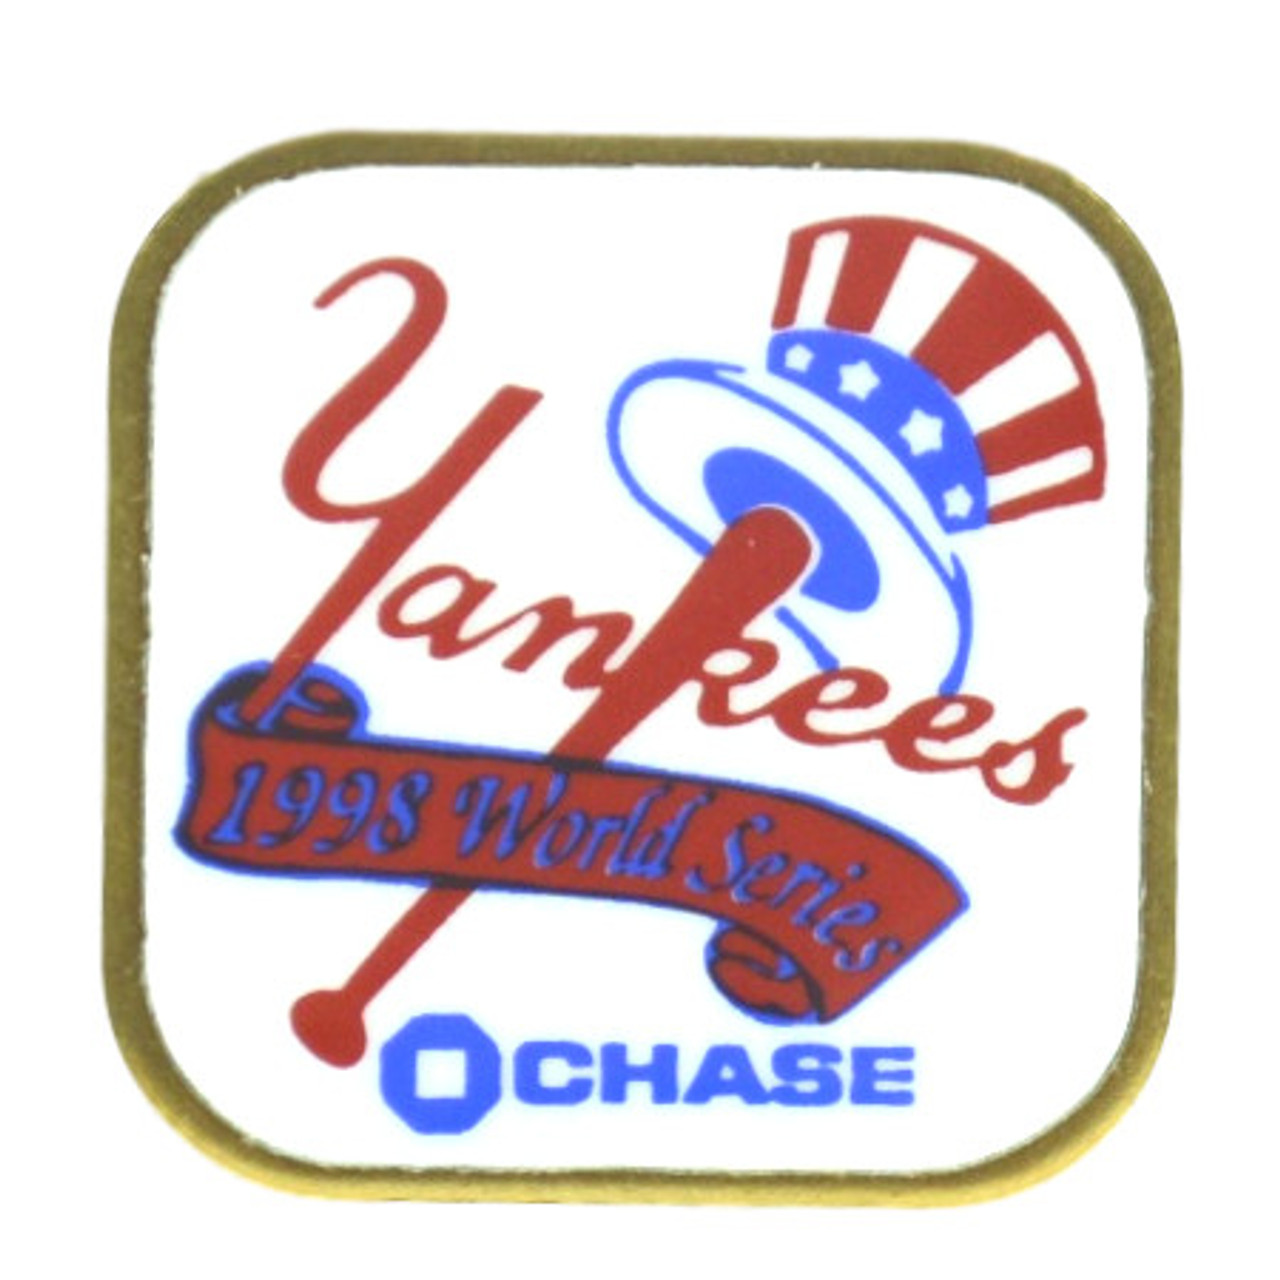 1949 NEW YORK YANKEES WORLD SERIES CHAMPIONSHIP PENDANT